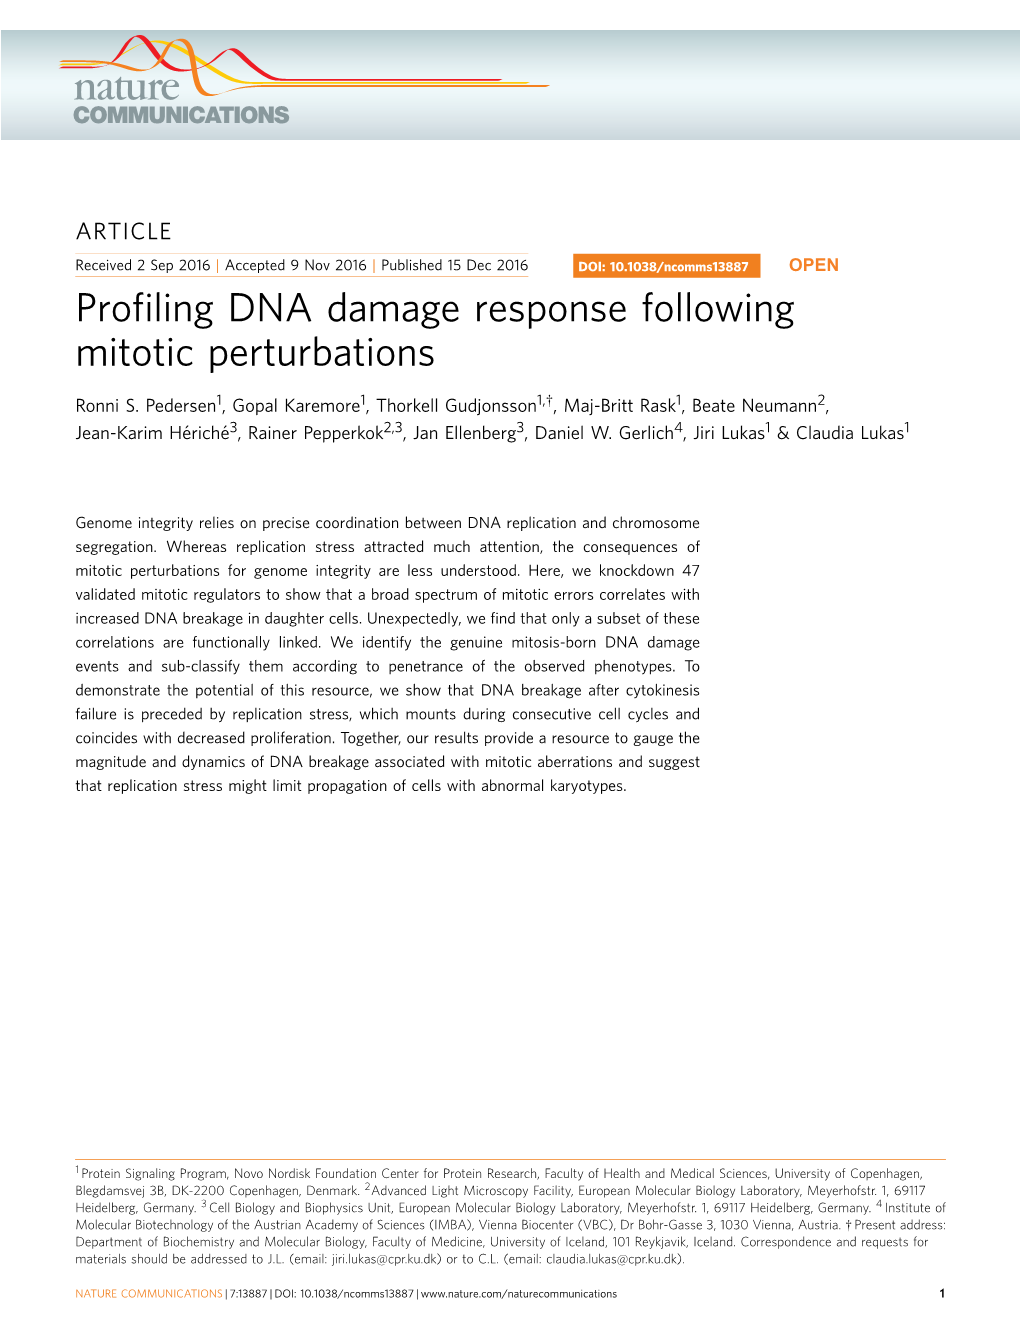 Profiling DNA Damage Response Following Mitotic Perturbations